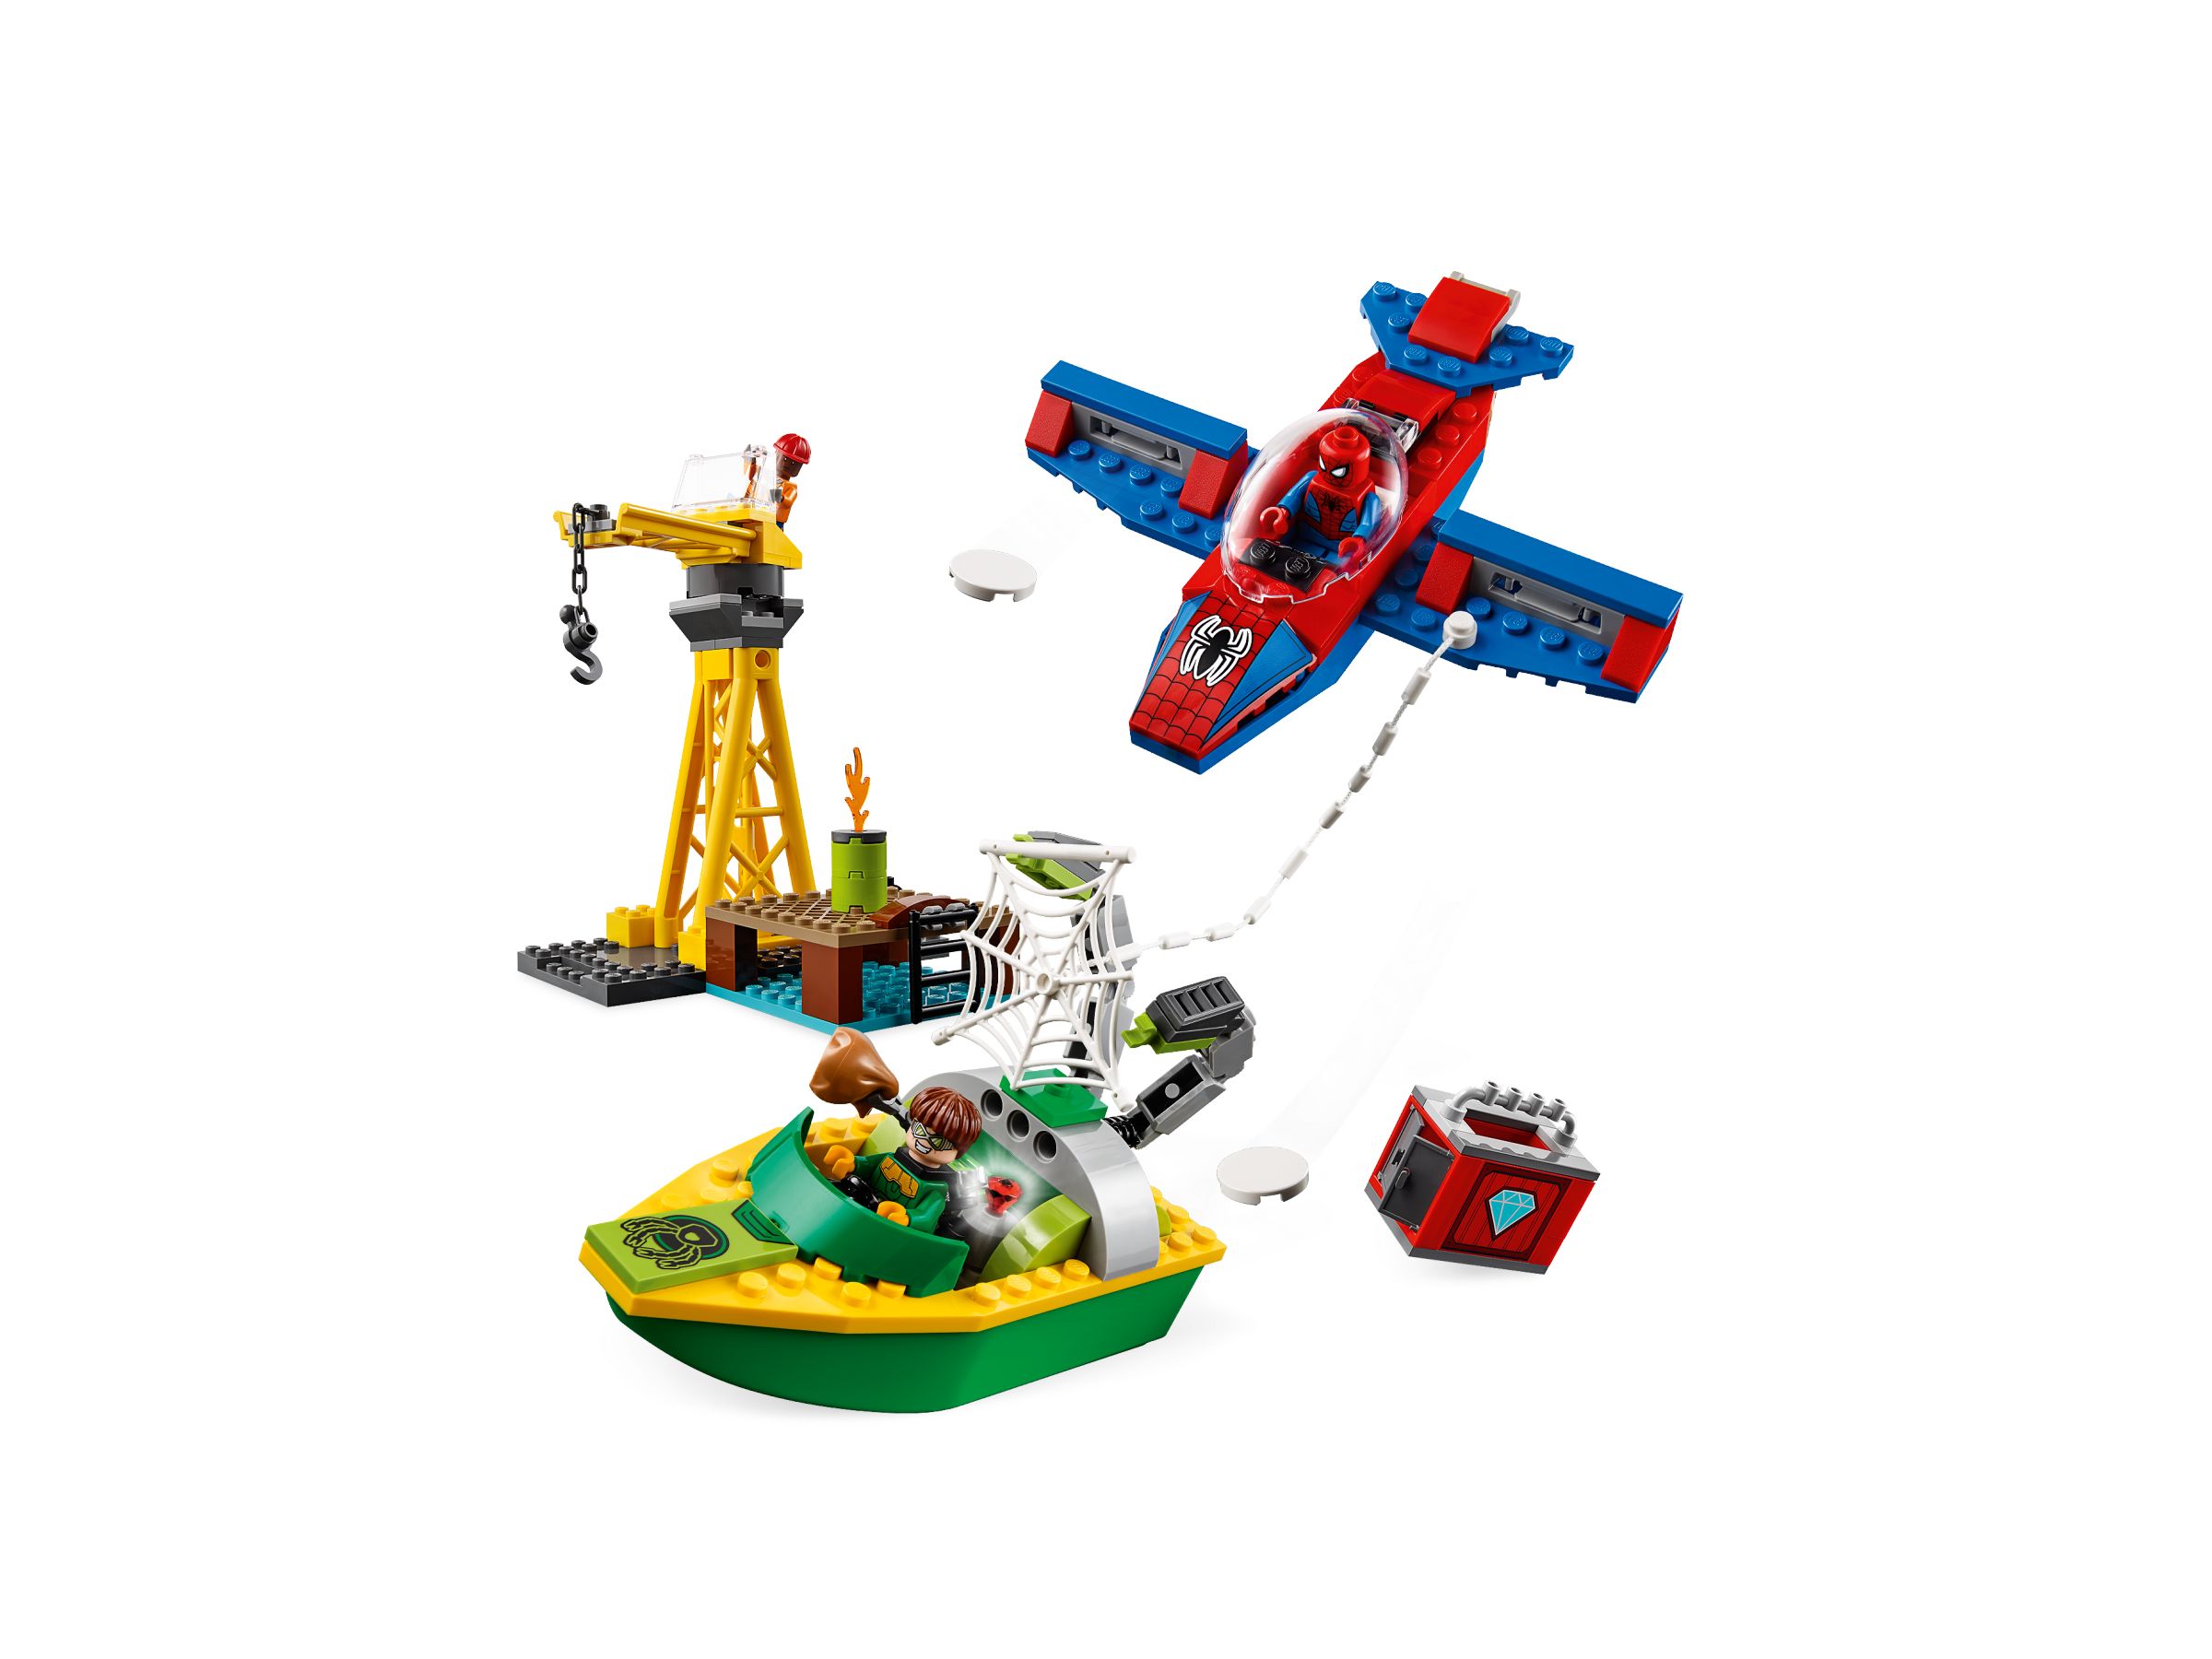 LEGO Super Heroes 76134 Spider-Man: Dock Ock Diamond LEGO_76134_alt3.jpg